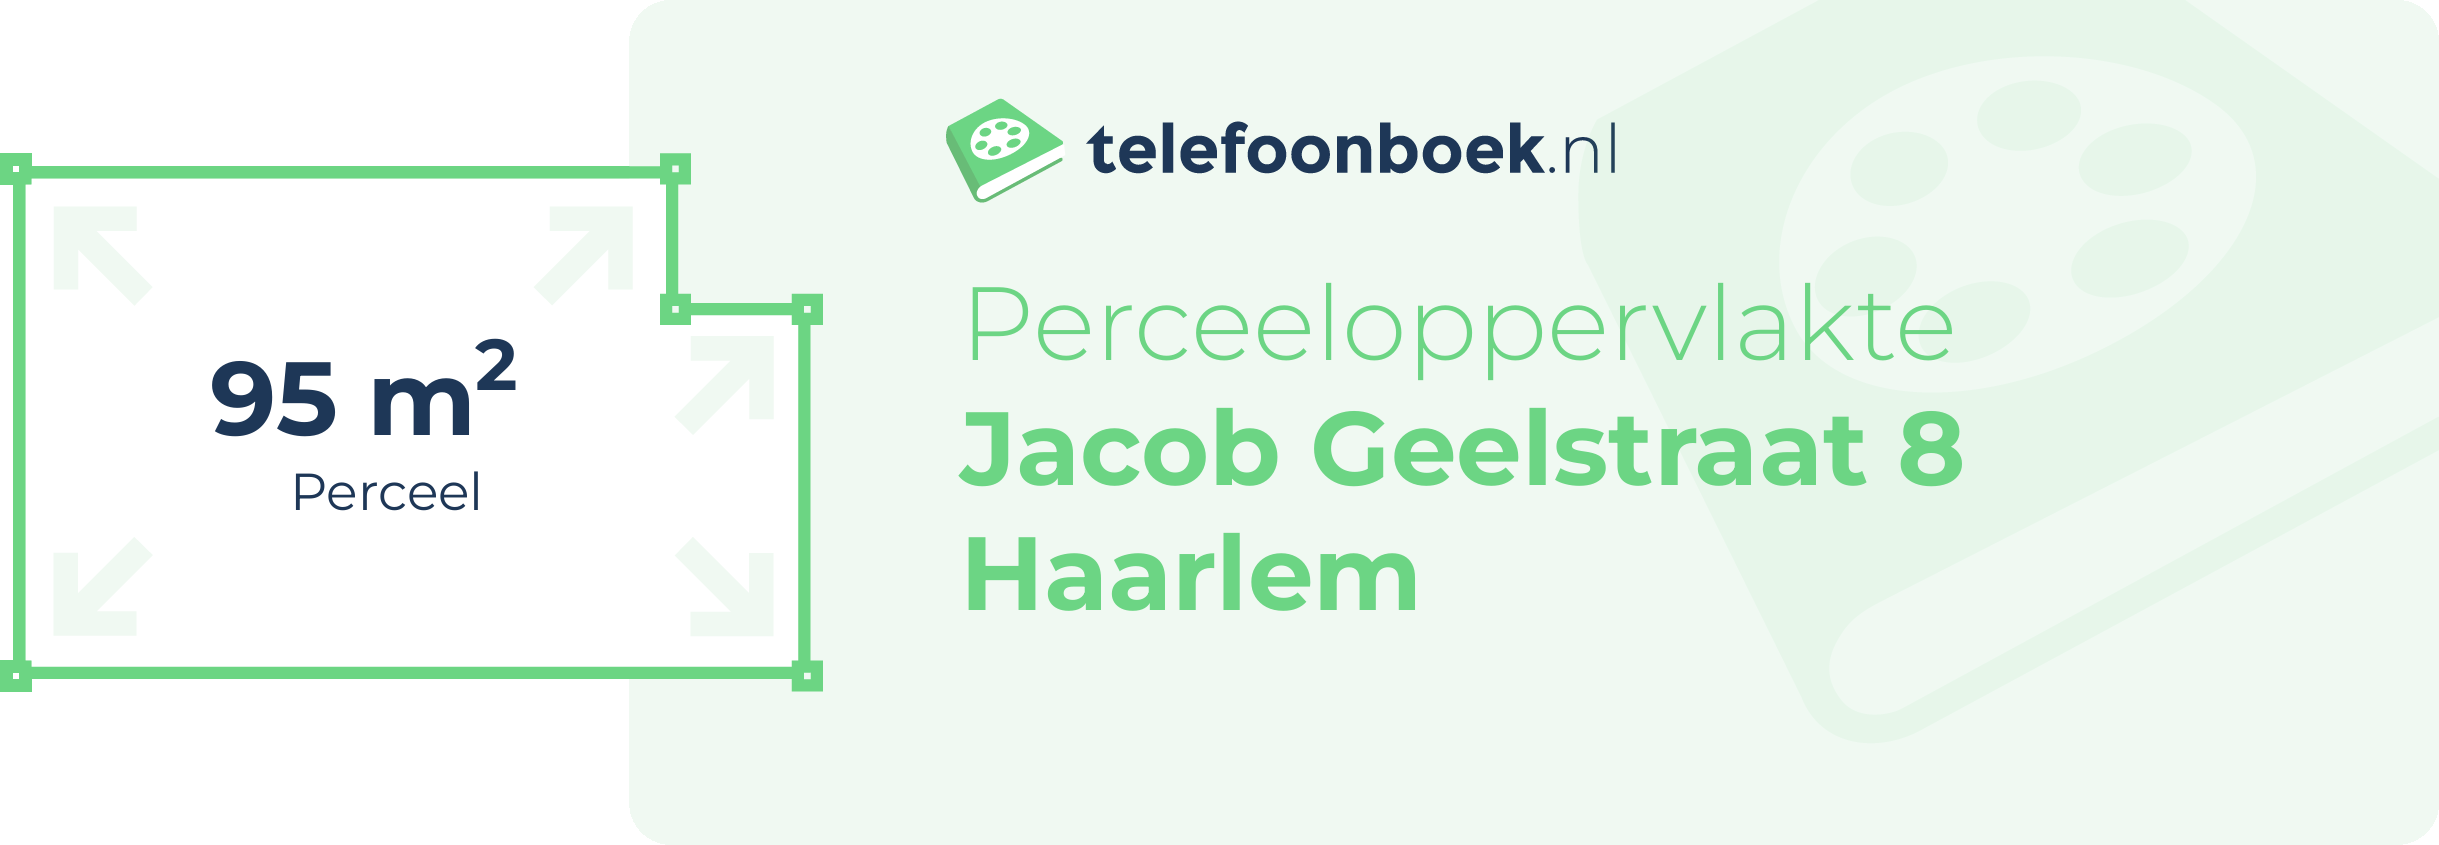 Perceeloppervlakte Jacob Geelstraat 8 Haarlem